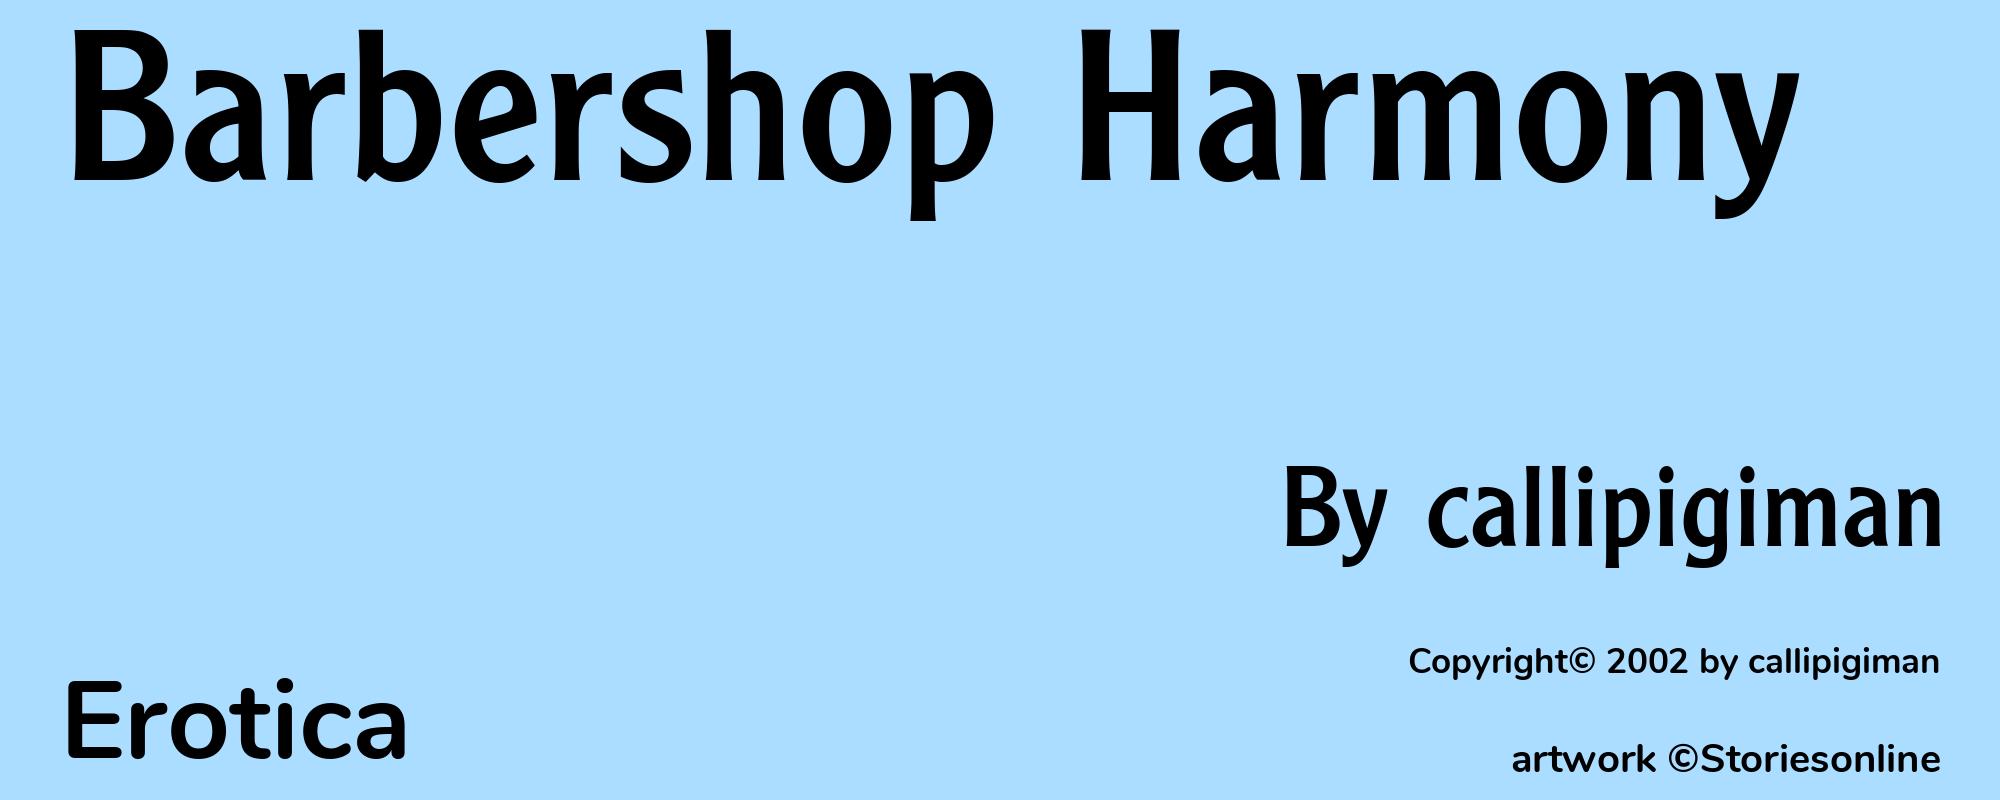 Barbershop Harmony - Cover